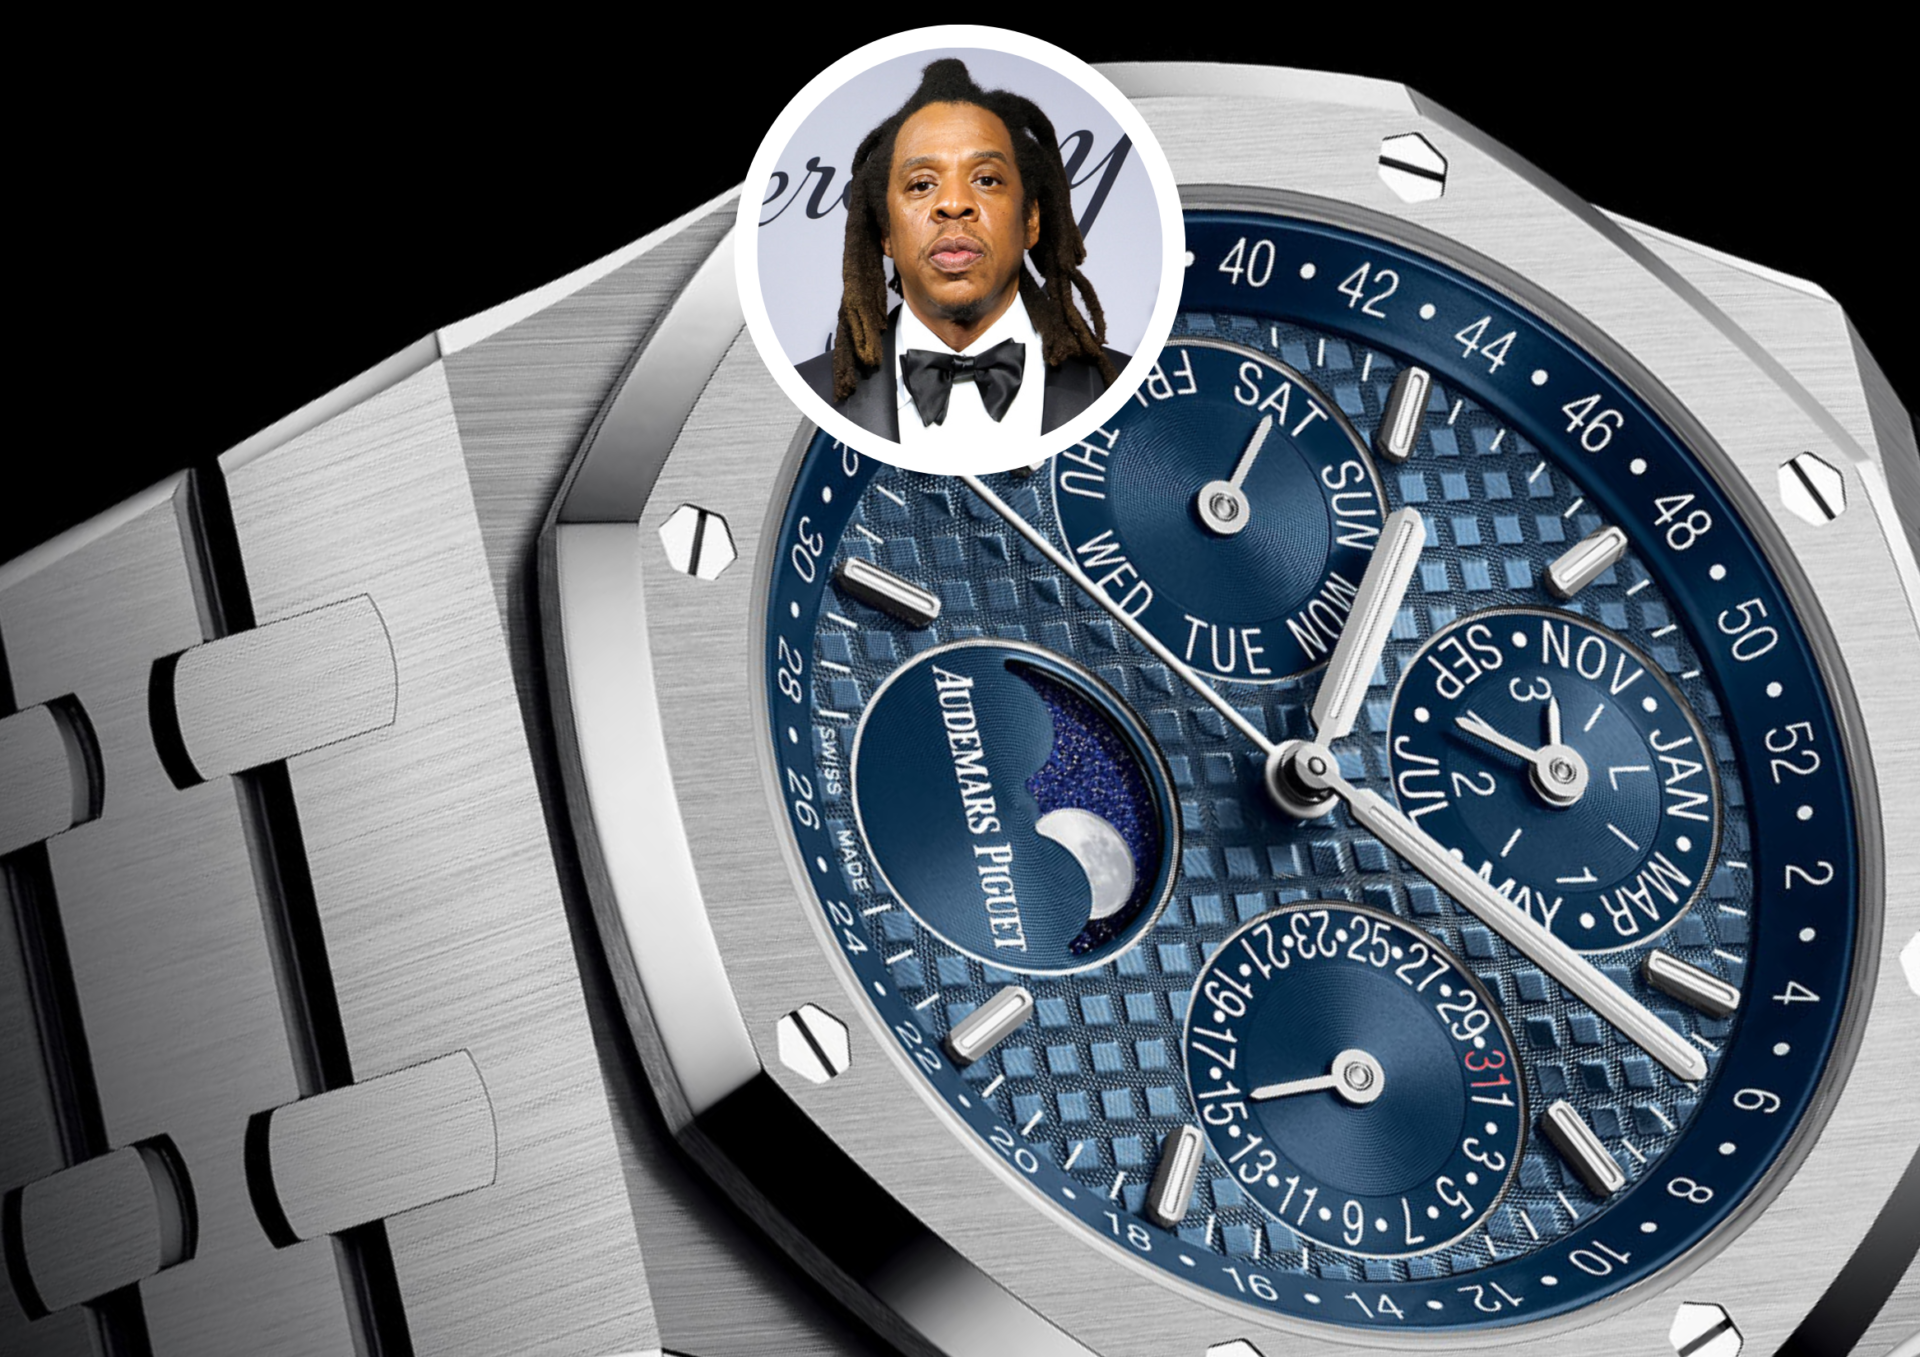 Jay Z's Royal Oak Perpetual Calendar Watch